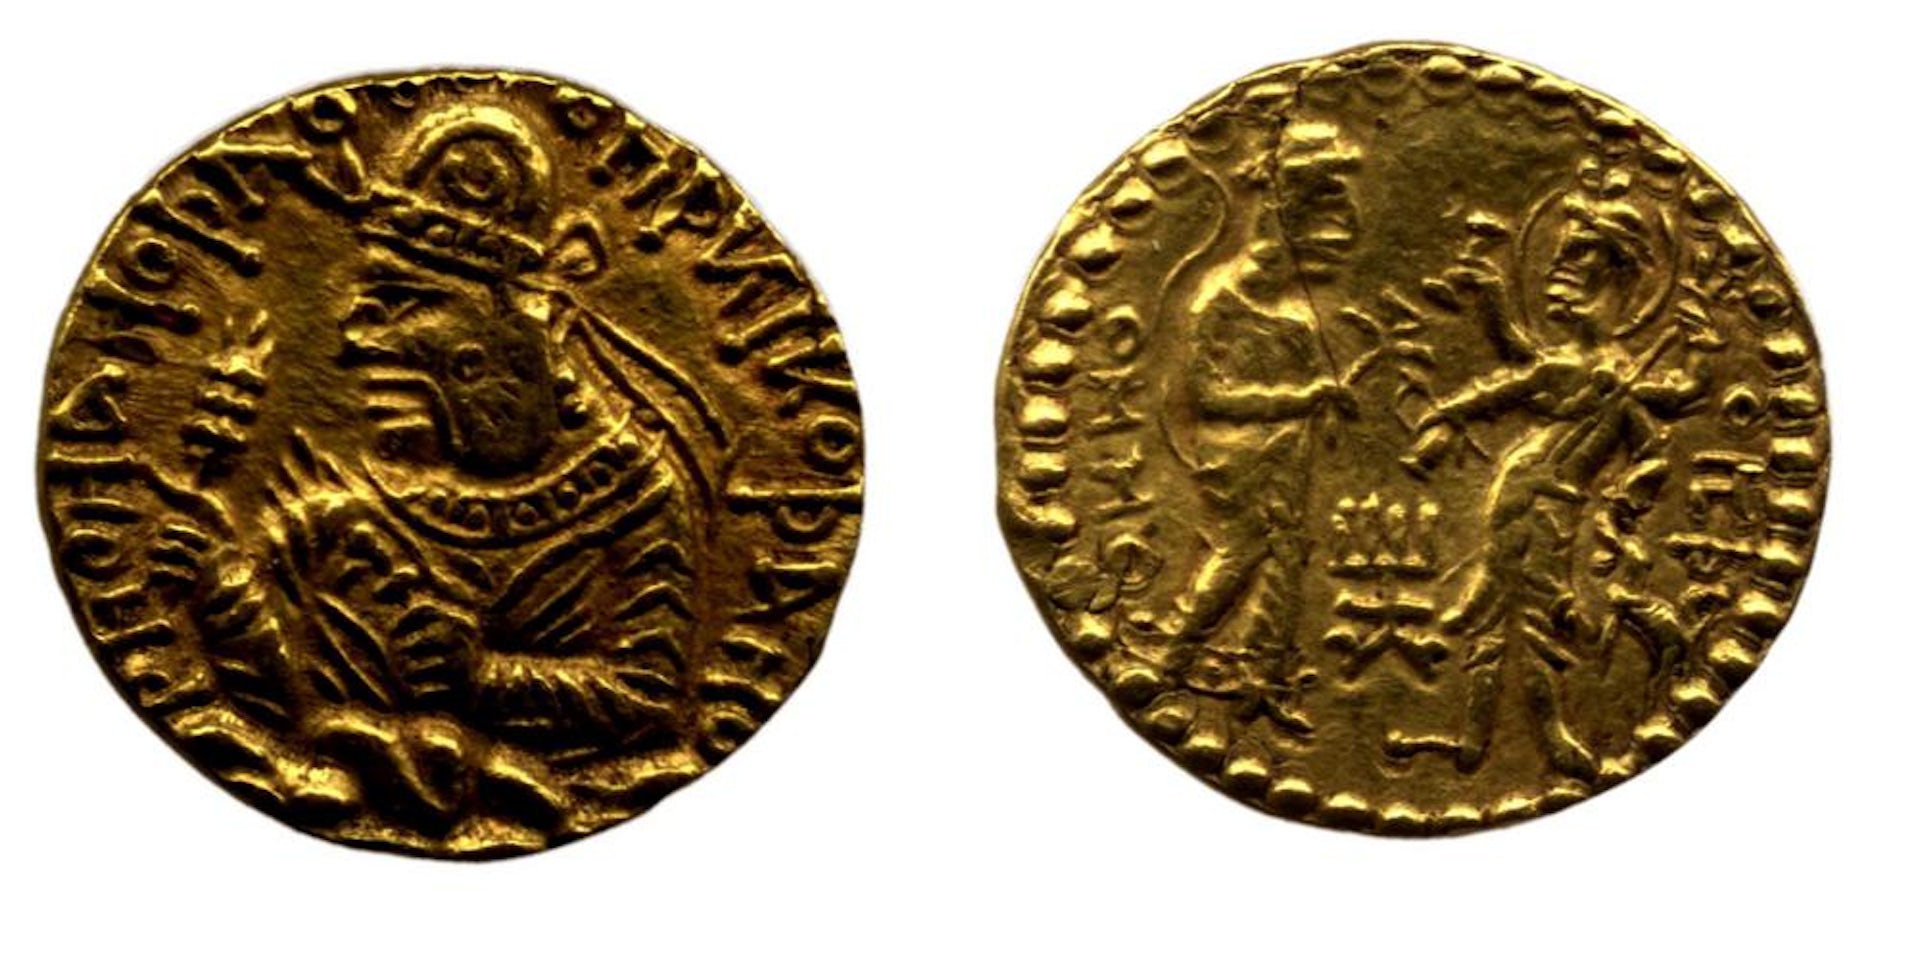 Gold coin of King Huvishka with Uma (Parvati) and Wesho (possibly Shiva) on the reverse, ca. 150 CE. 